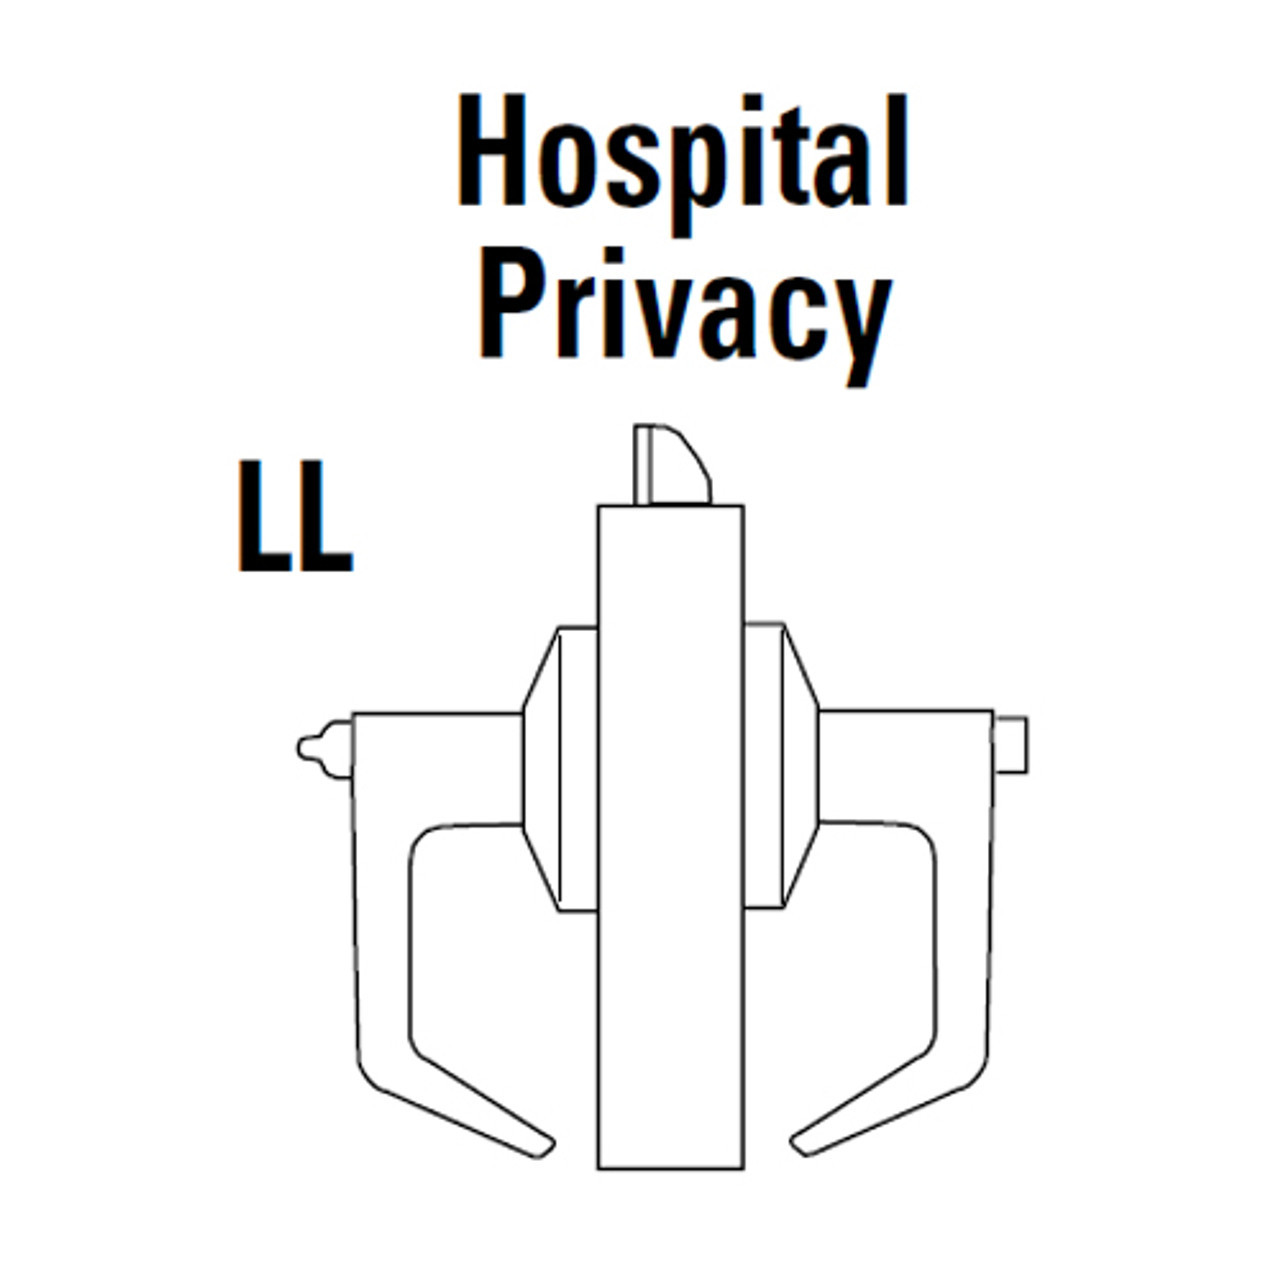 9K30LL14LSTK618LM Best 9K Series Hospital Privacy Heavy Duty Cylindrical Lever Locks in Bright Nickel